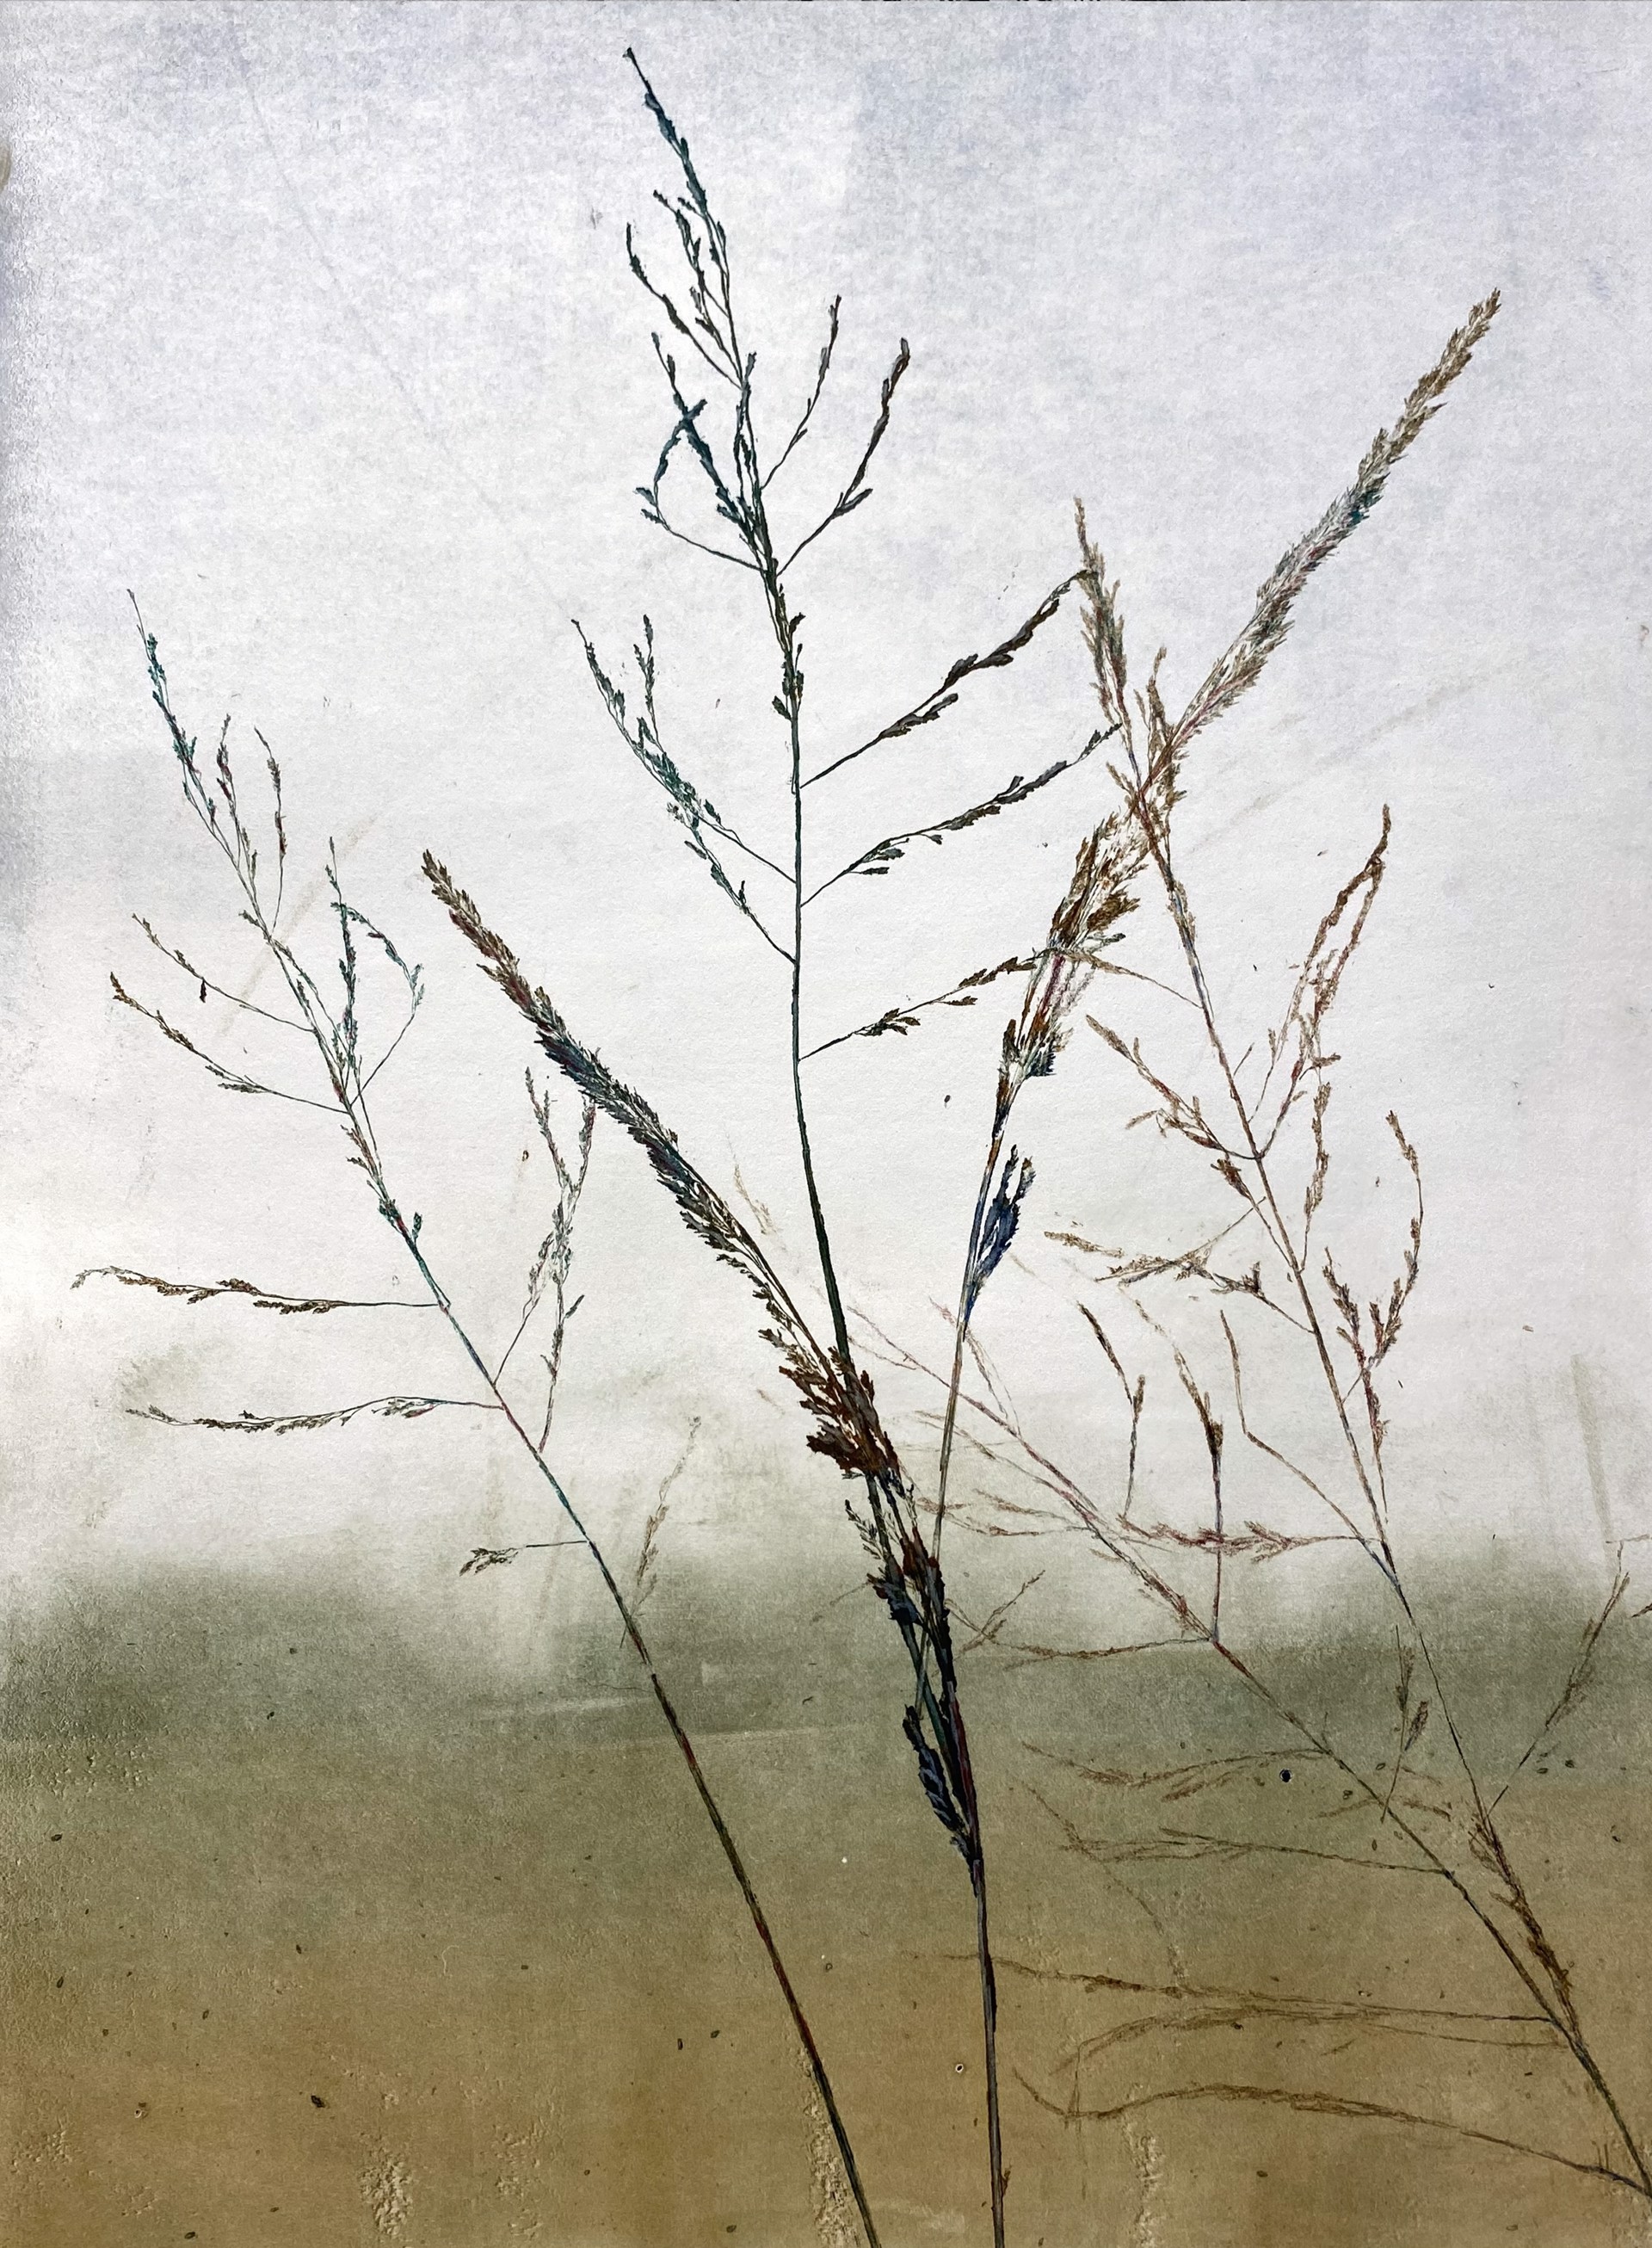 Grass in the Landscape by Marilou Kundmueller